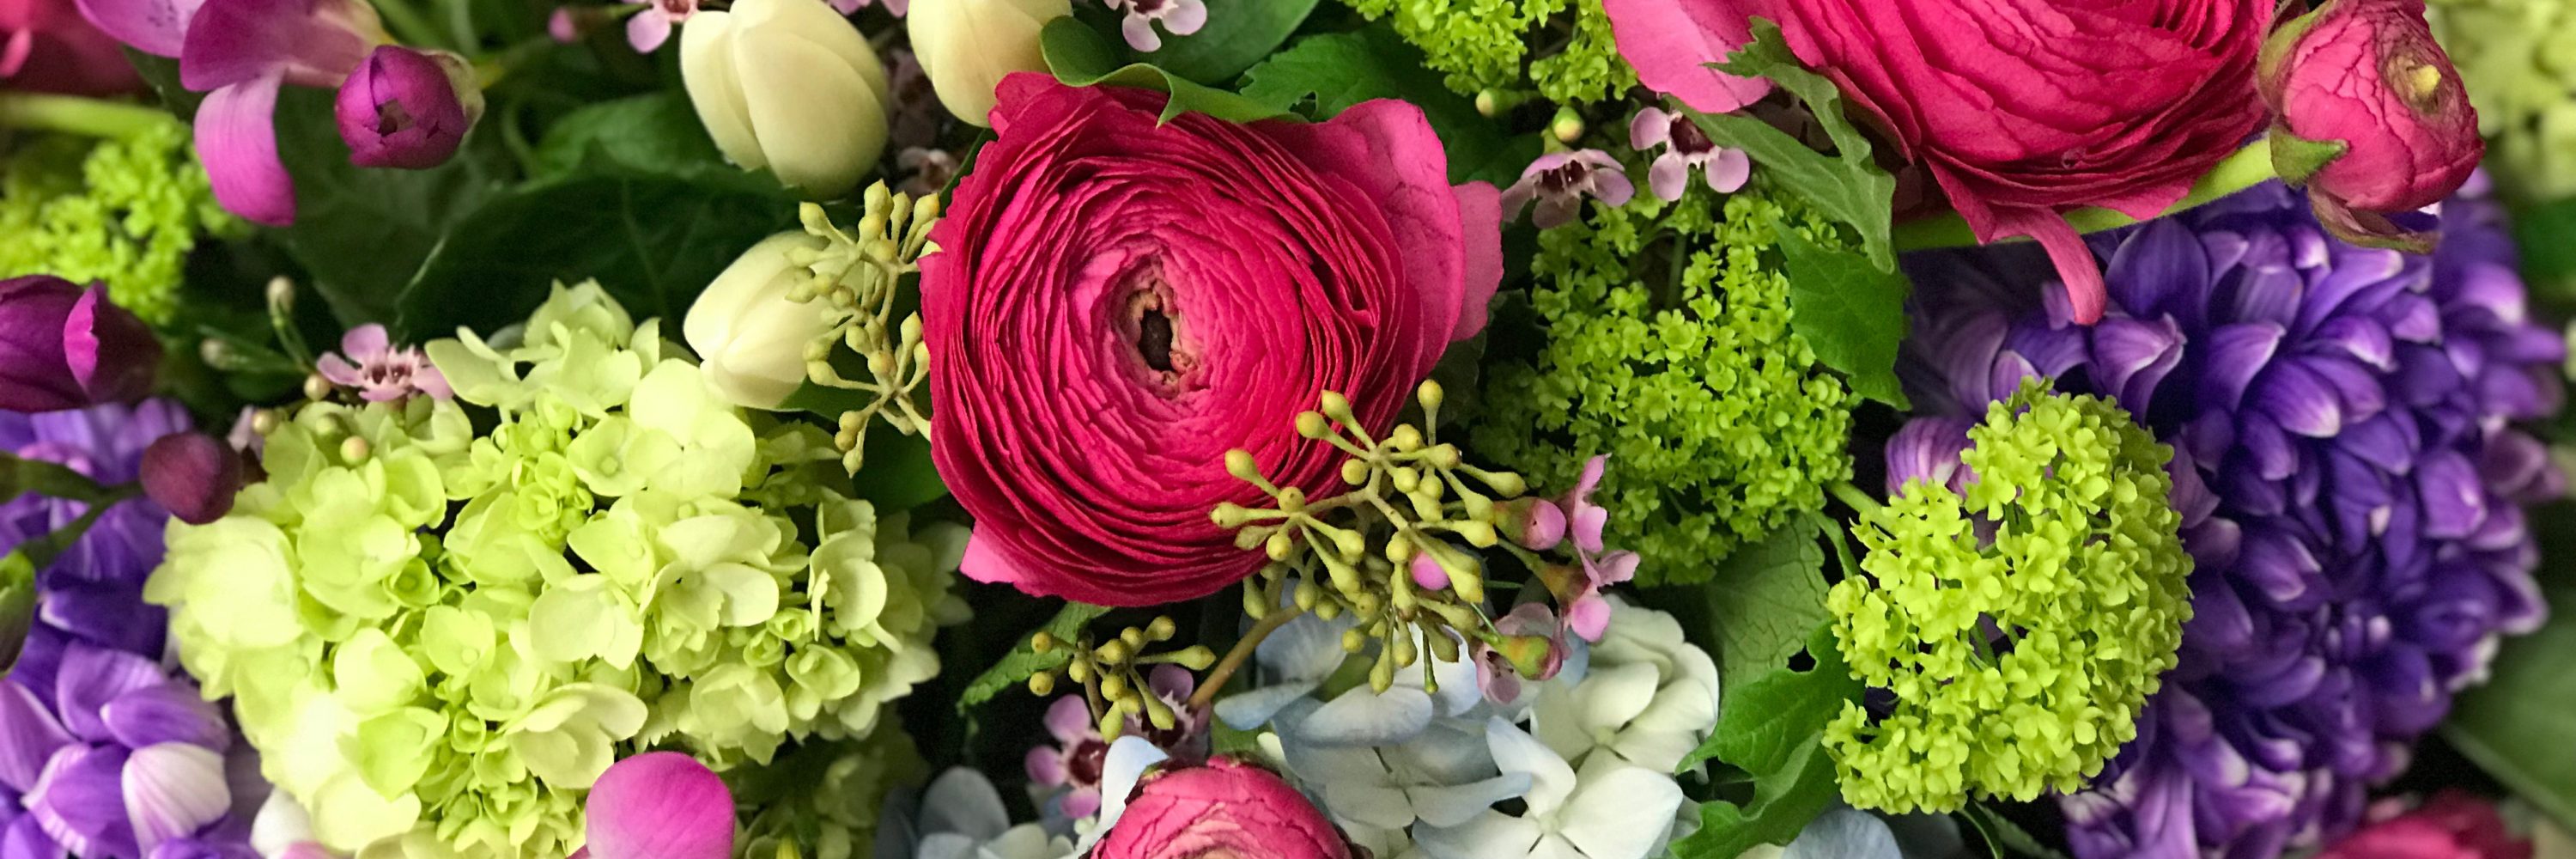 Violet Blooms, Pickering Flower Shops, Florist Pickering Durham Flowers